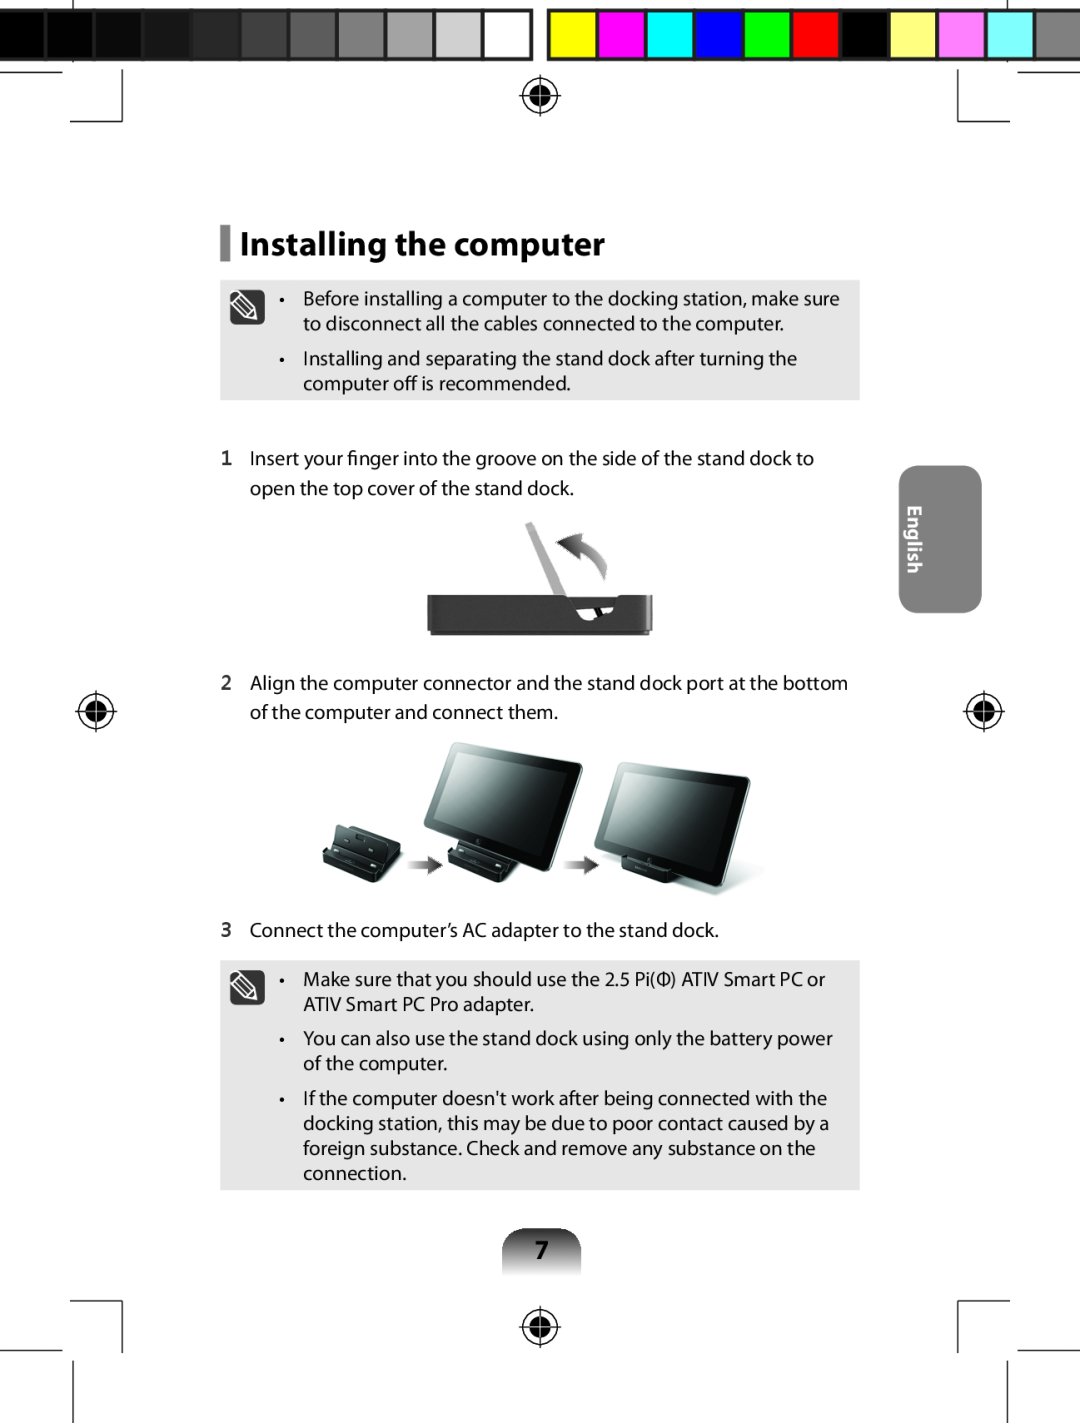 Samsung AA-RD7NMKD/US, AARD7NSDOUS manual Installing the computer, English 